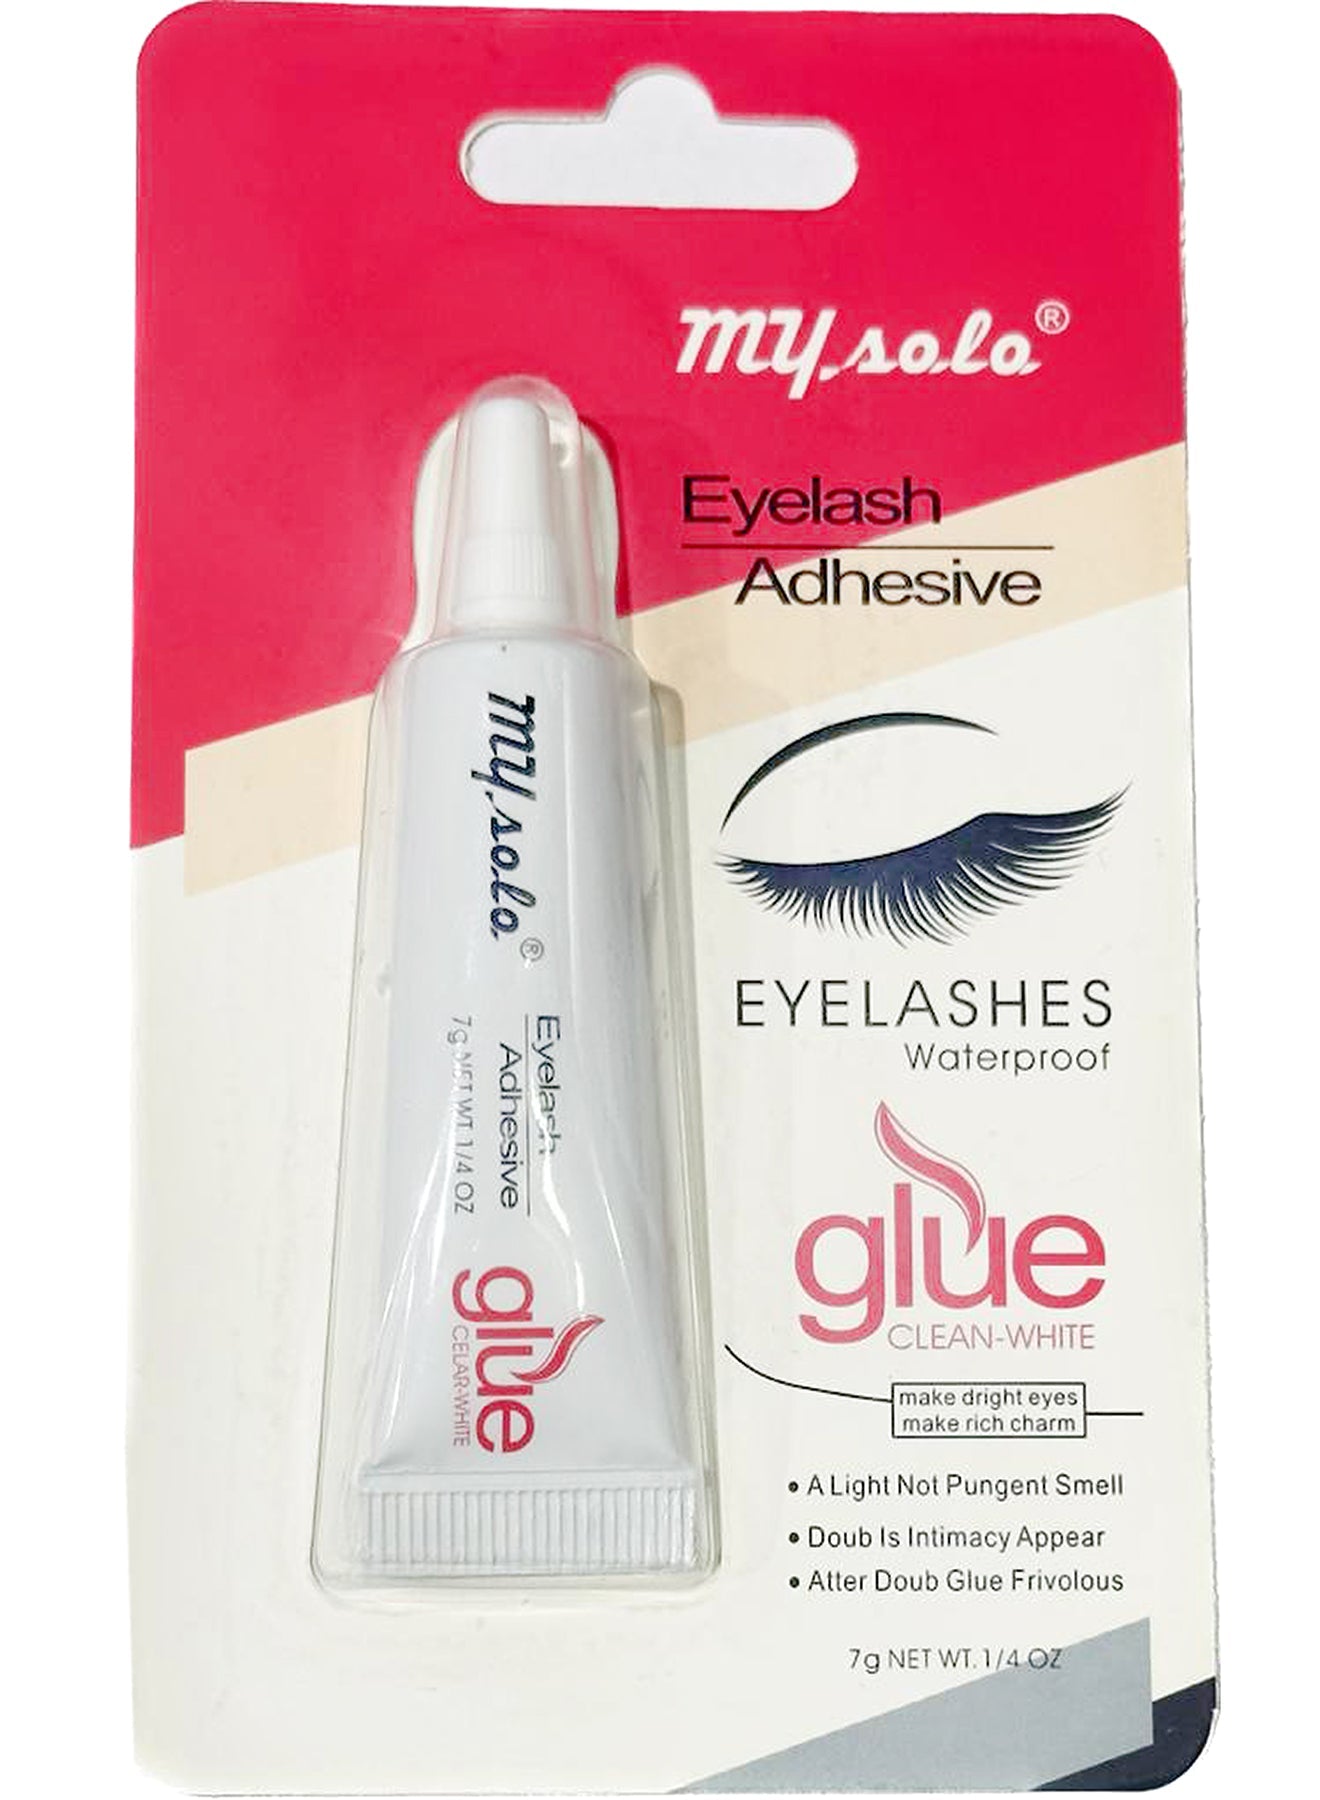 Mysolo Eyelash Adhesive Glue Clean White 7g Value Pack of 12 